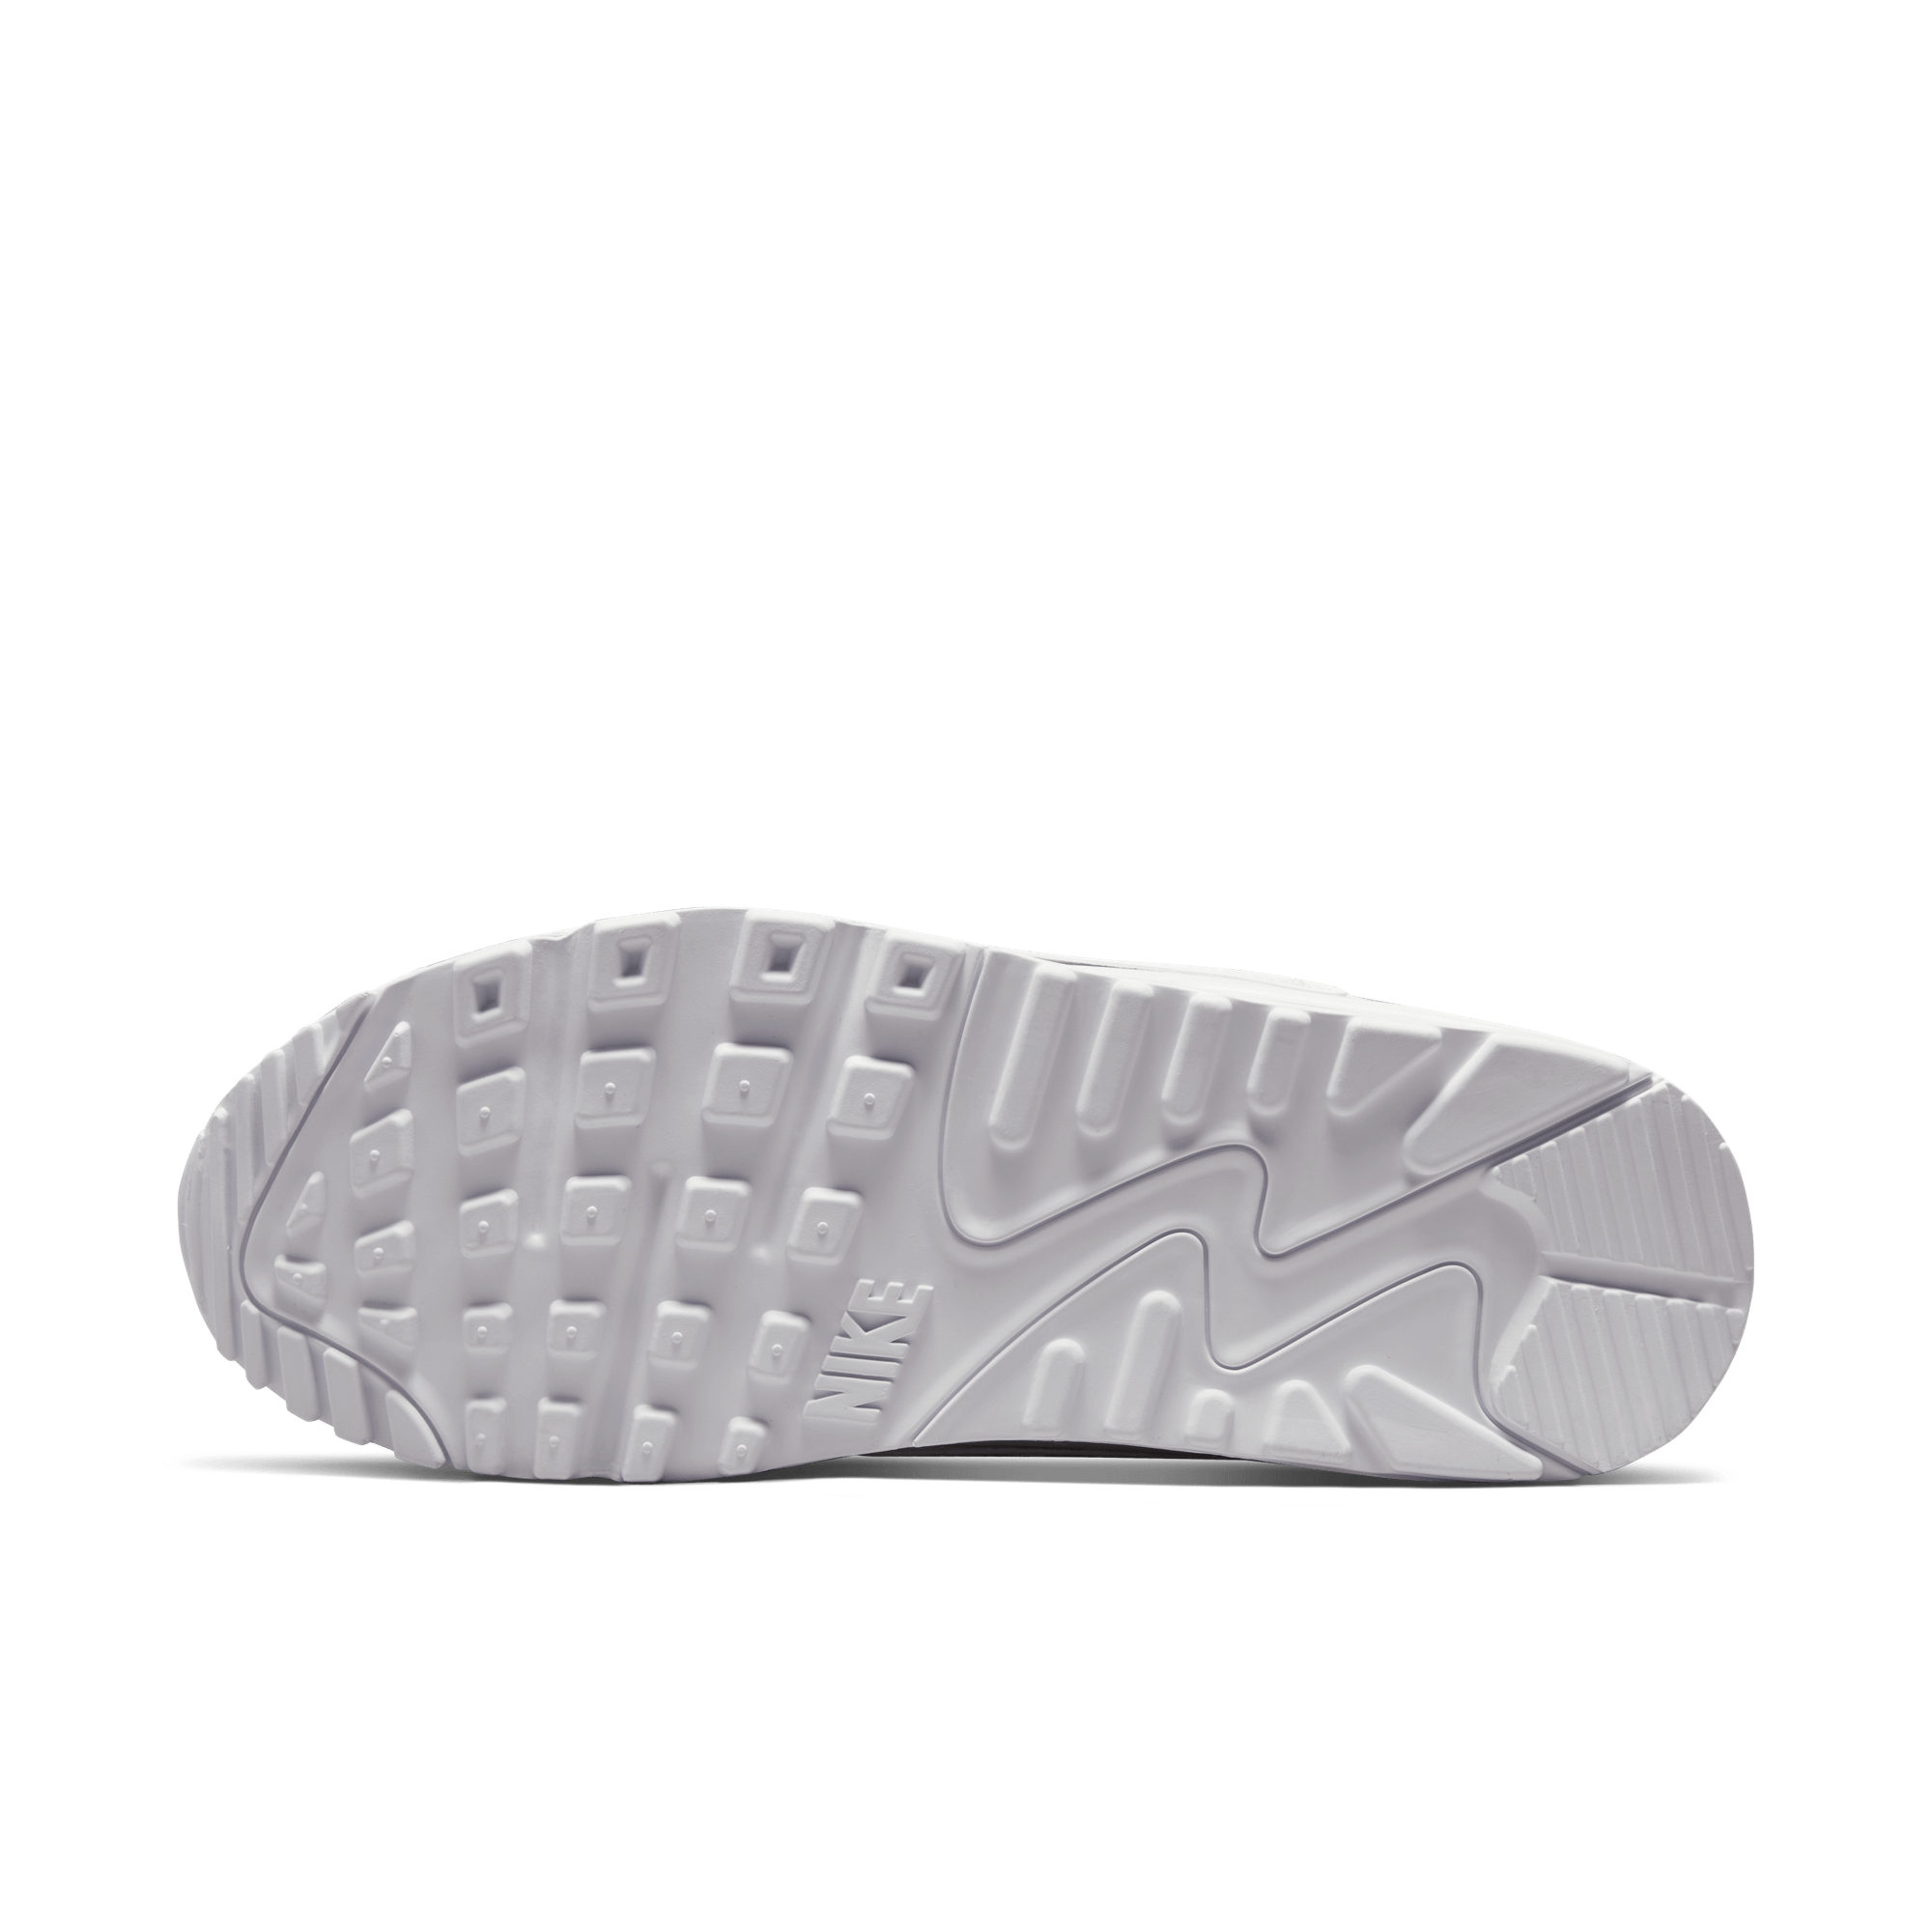 Nike FOOTWEAR Nike Air Max 90 Futura  - Women's